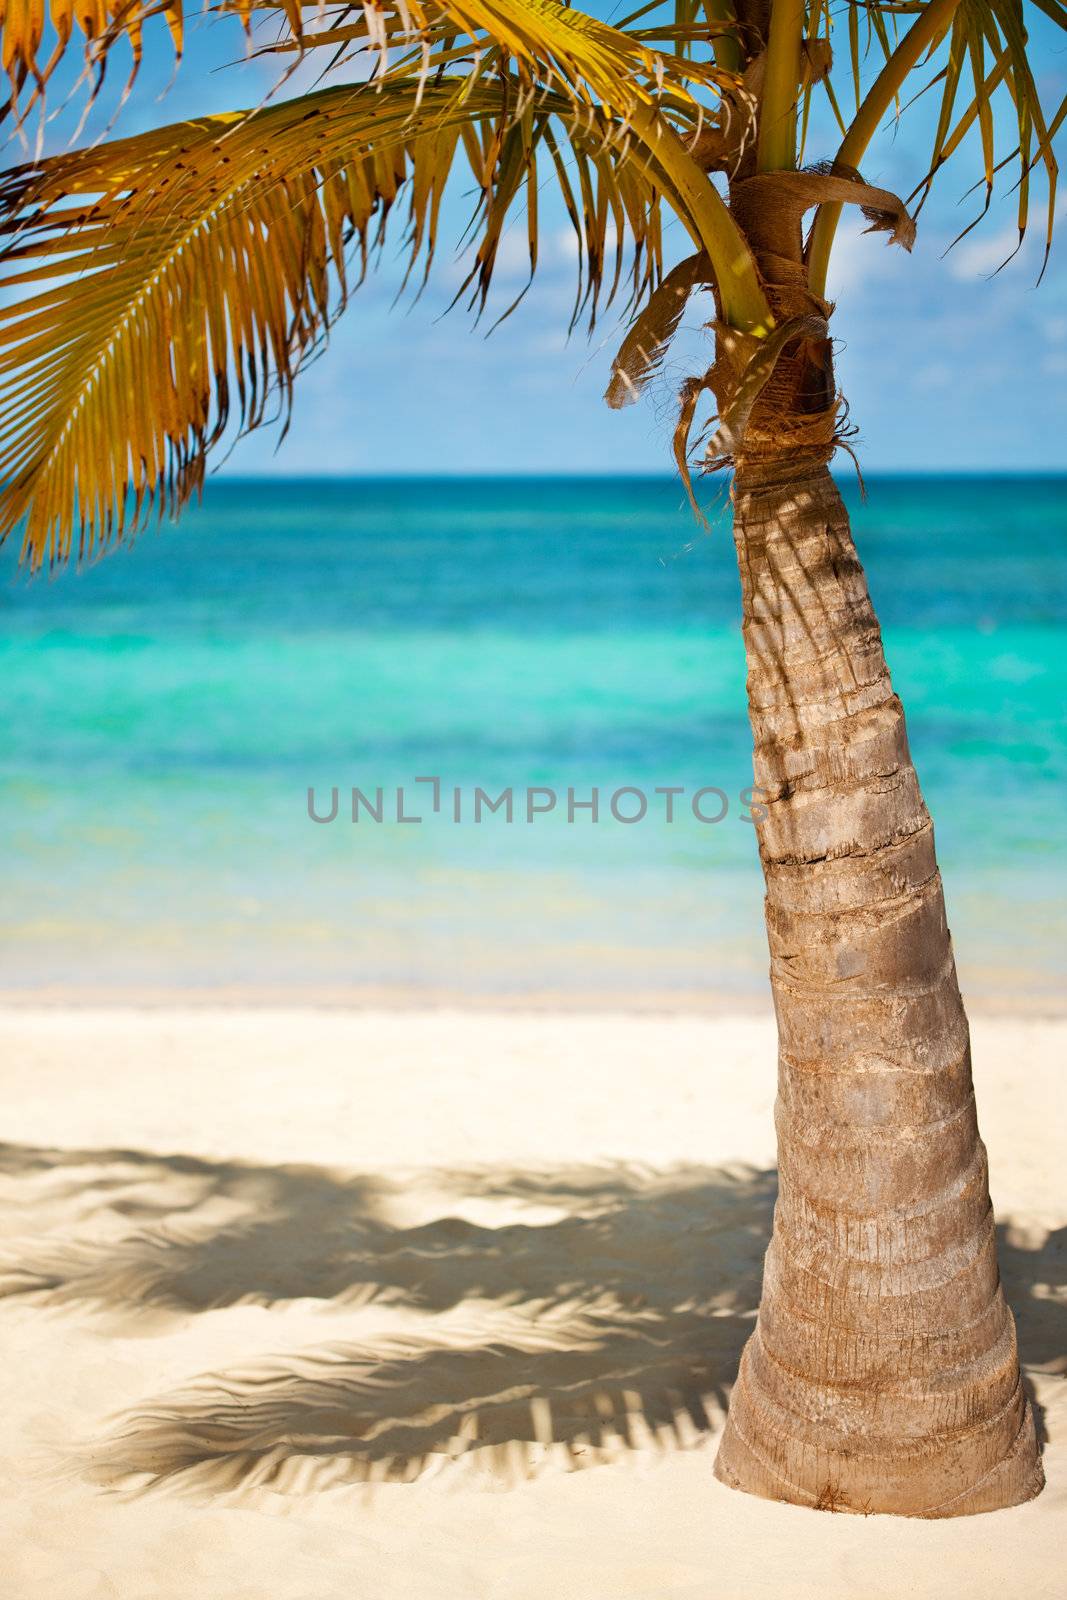 Coconut palm tree by mihhailov